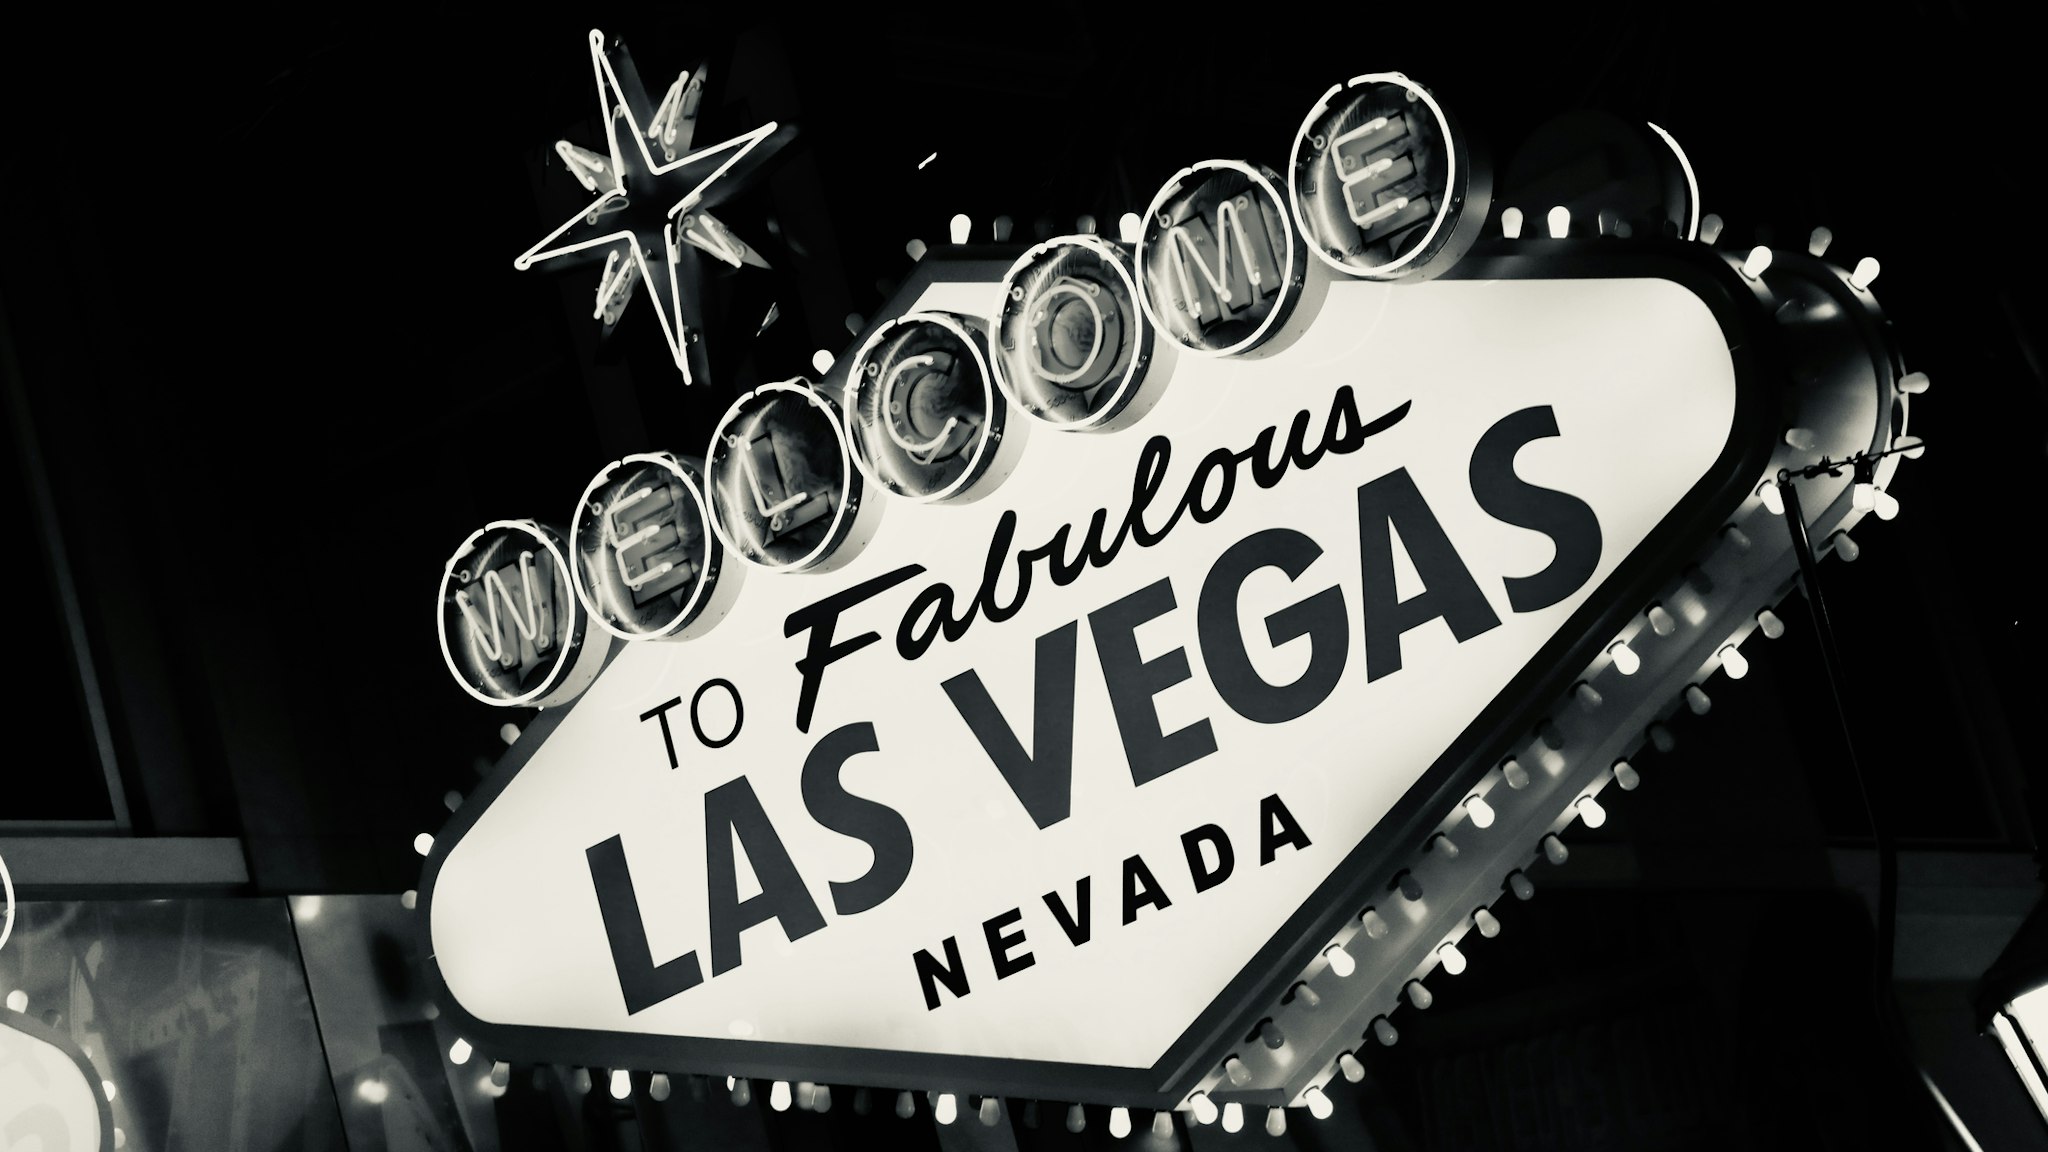 Viva Las Vegas sign - stock photo